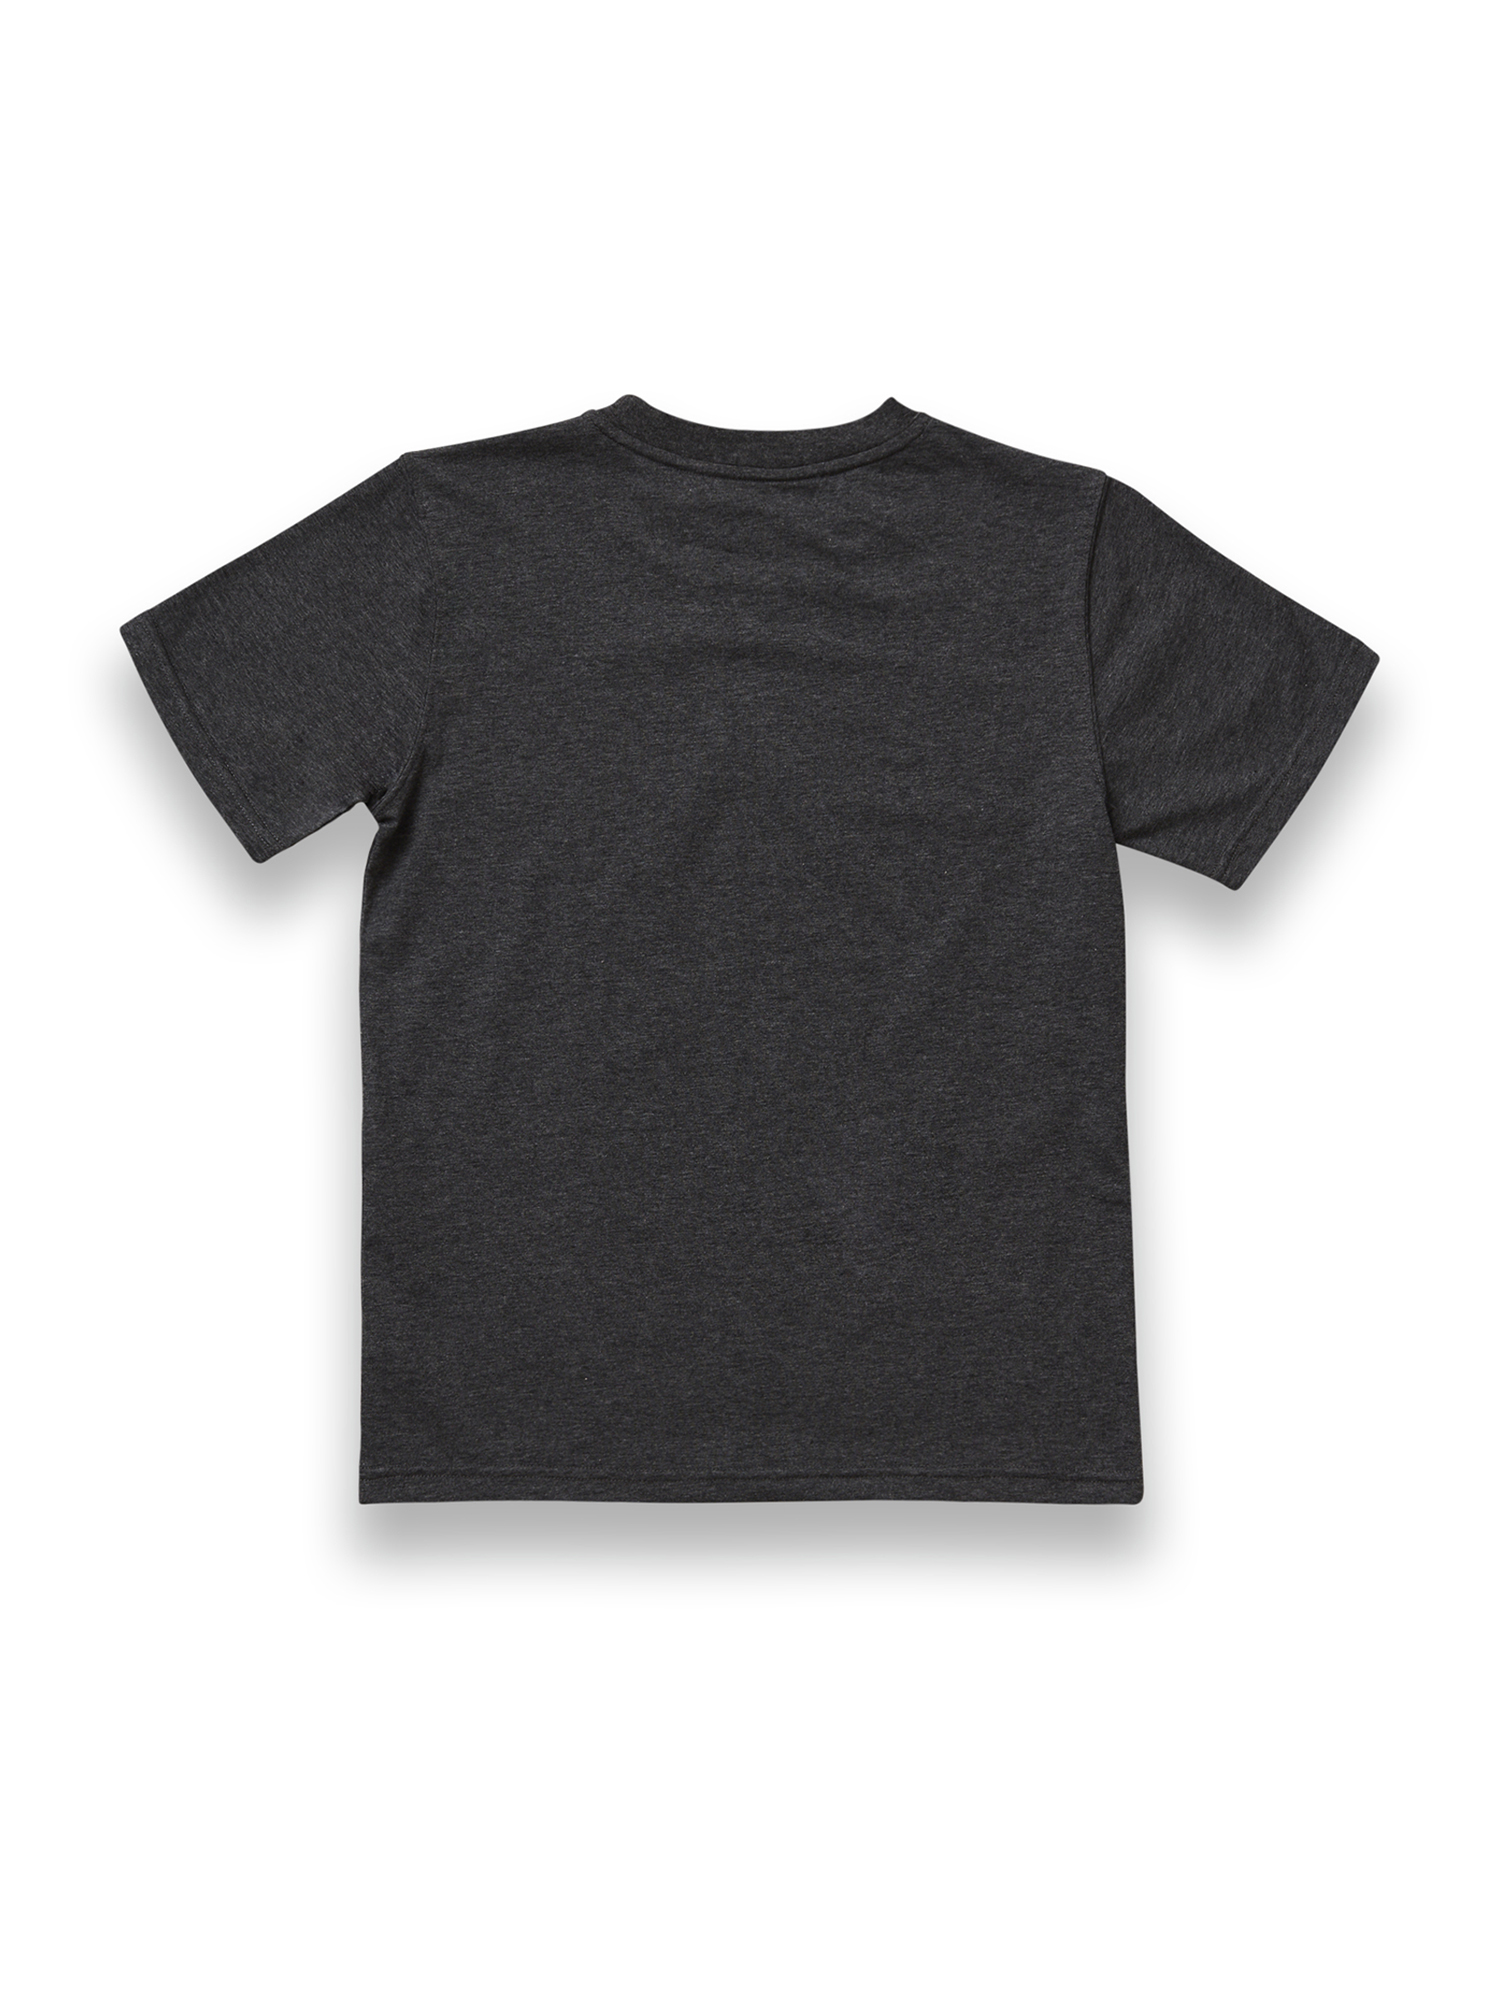 Reebok Boys Short Sleeve Graphic 2-Pack T-Shirts, Size 4-18 - image 3 of 5